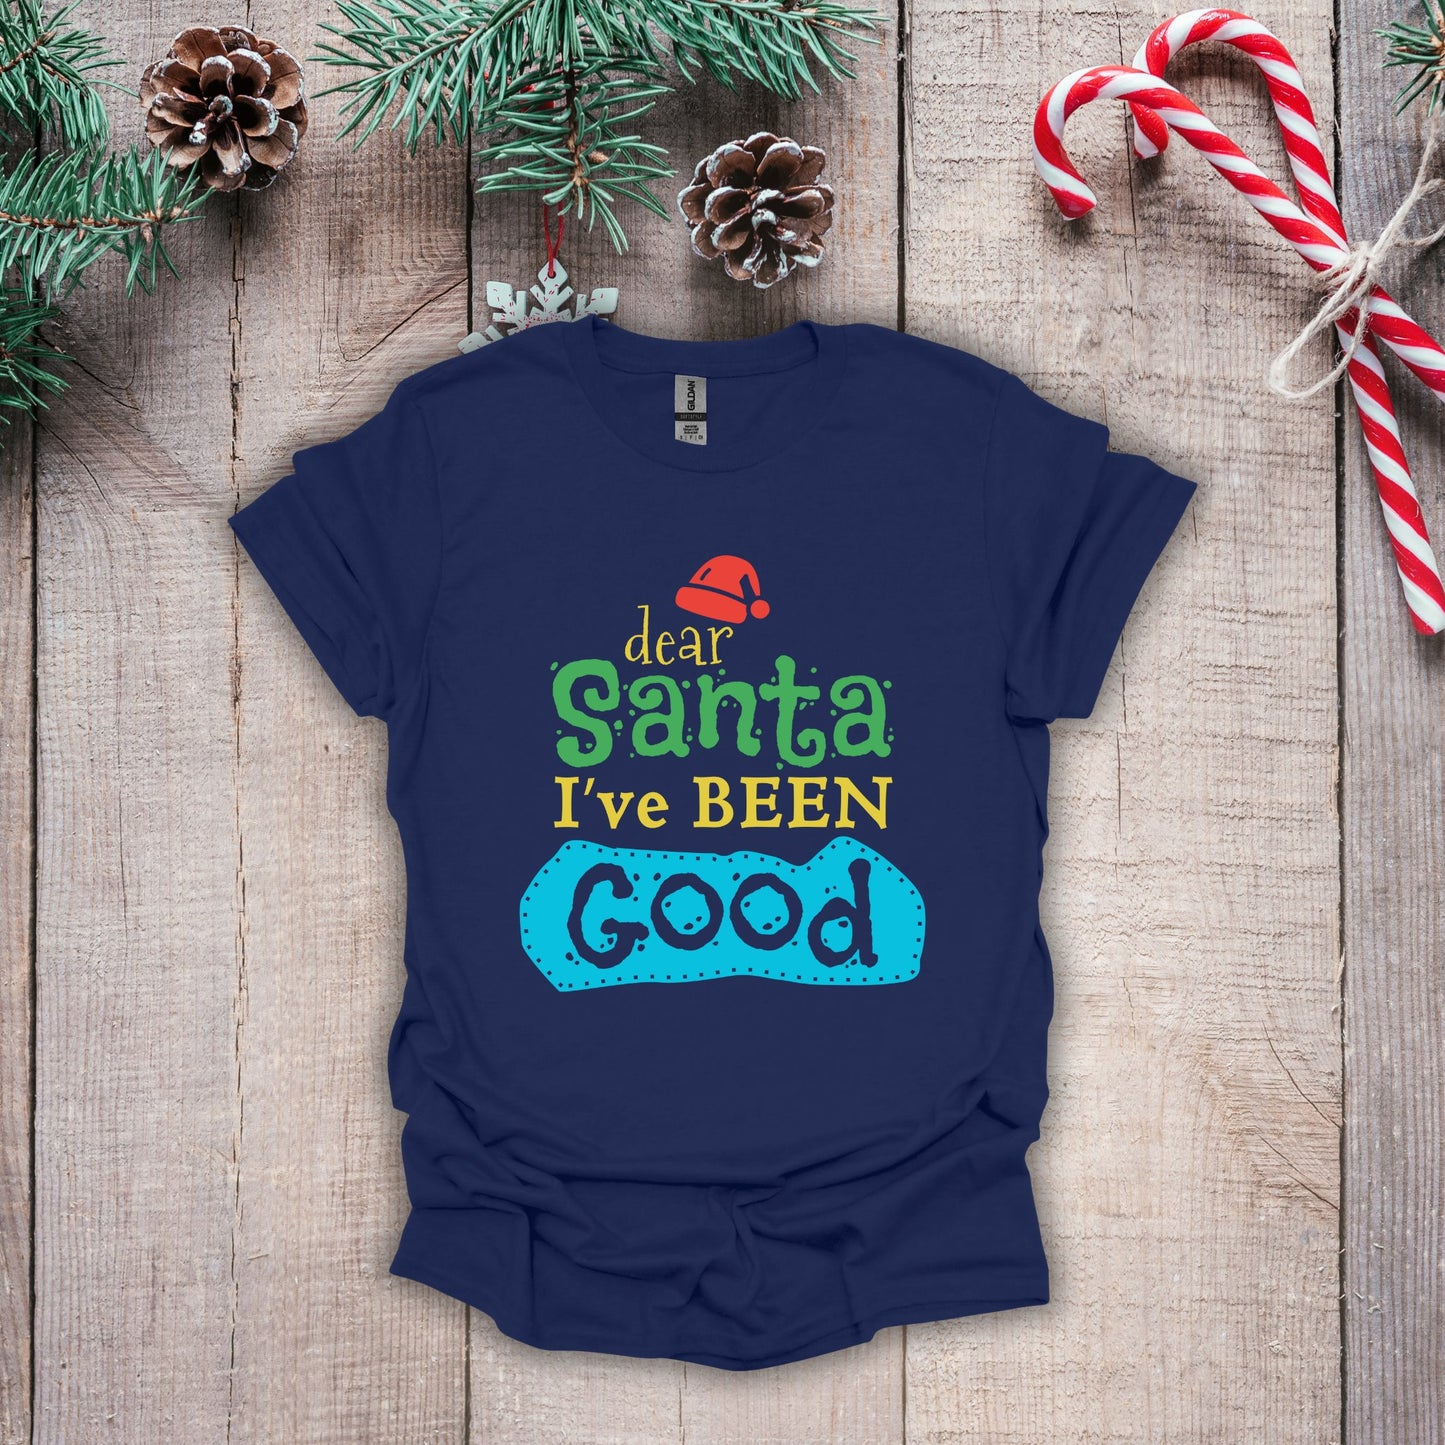 Christmas T-Shirt - Dear Santa I've Been Good - Cute Christmas Shirts - Youth and Adult Christmas TShirts T-Shirts Graphic Avenue Navy Adult Small 